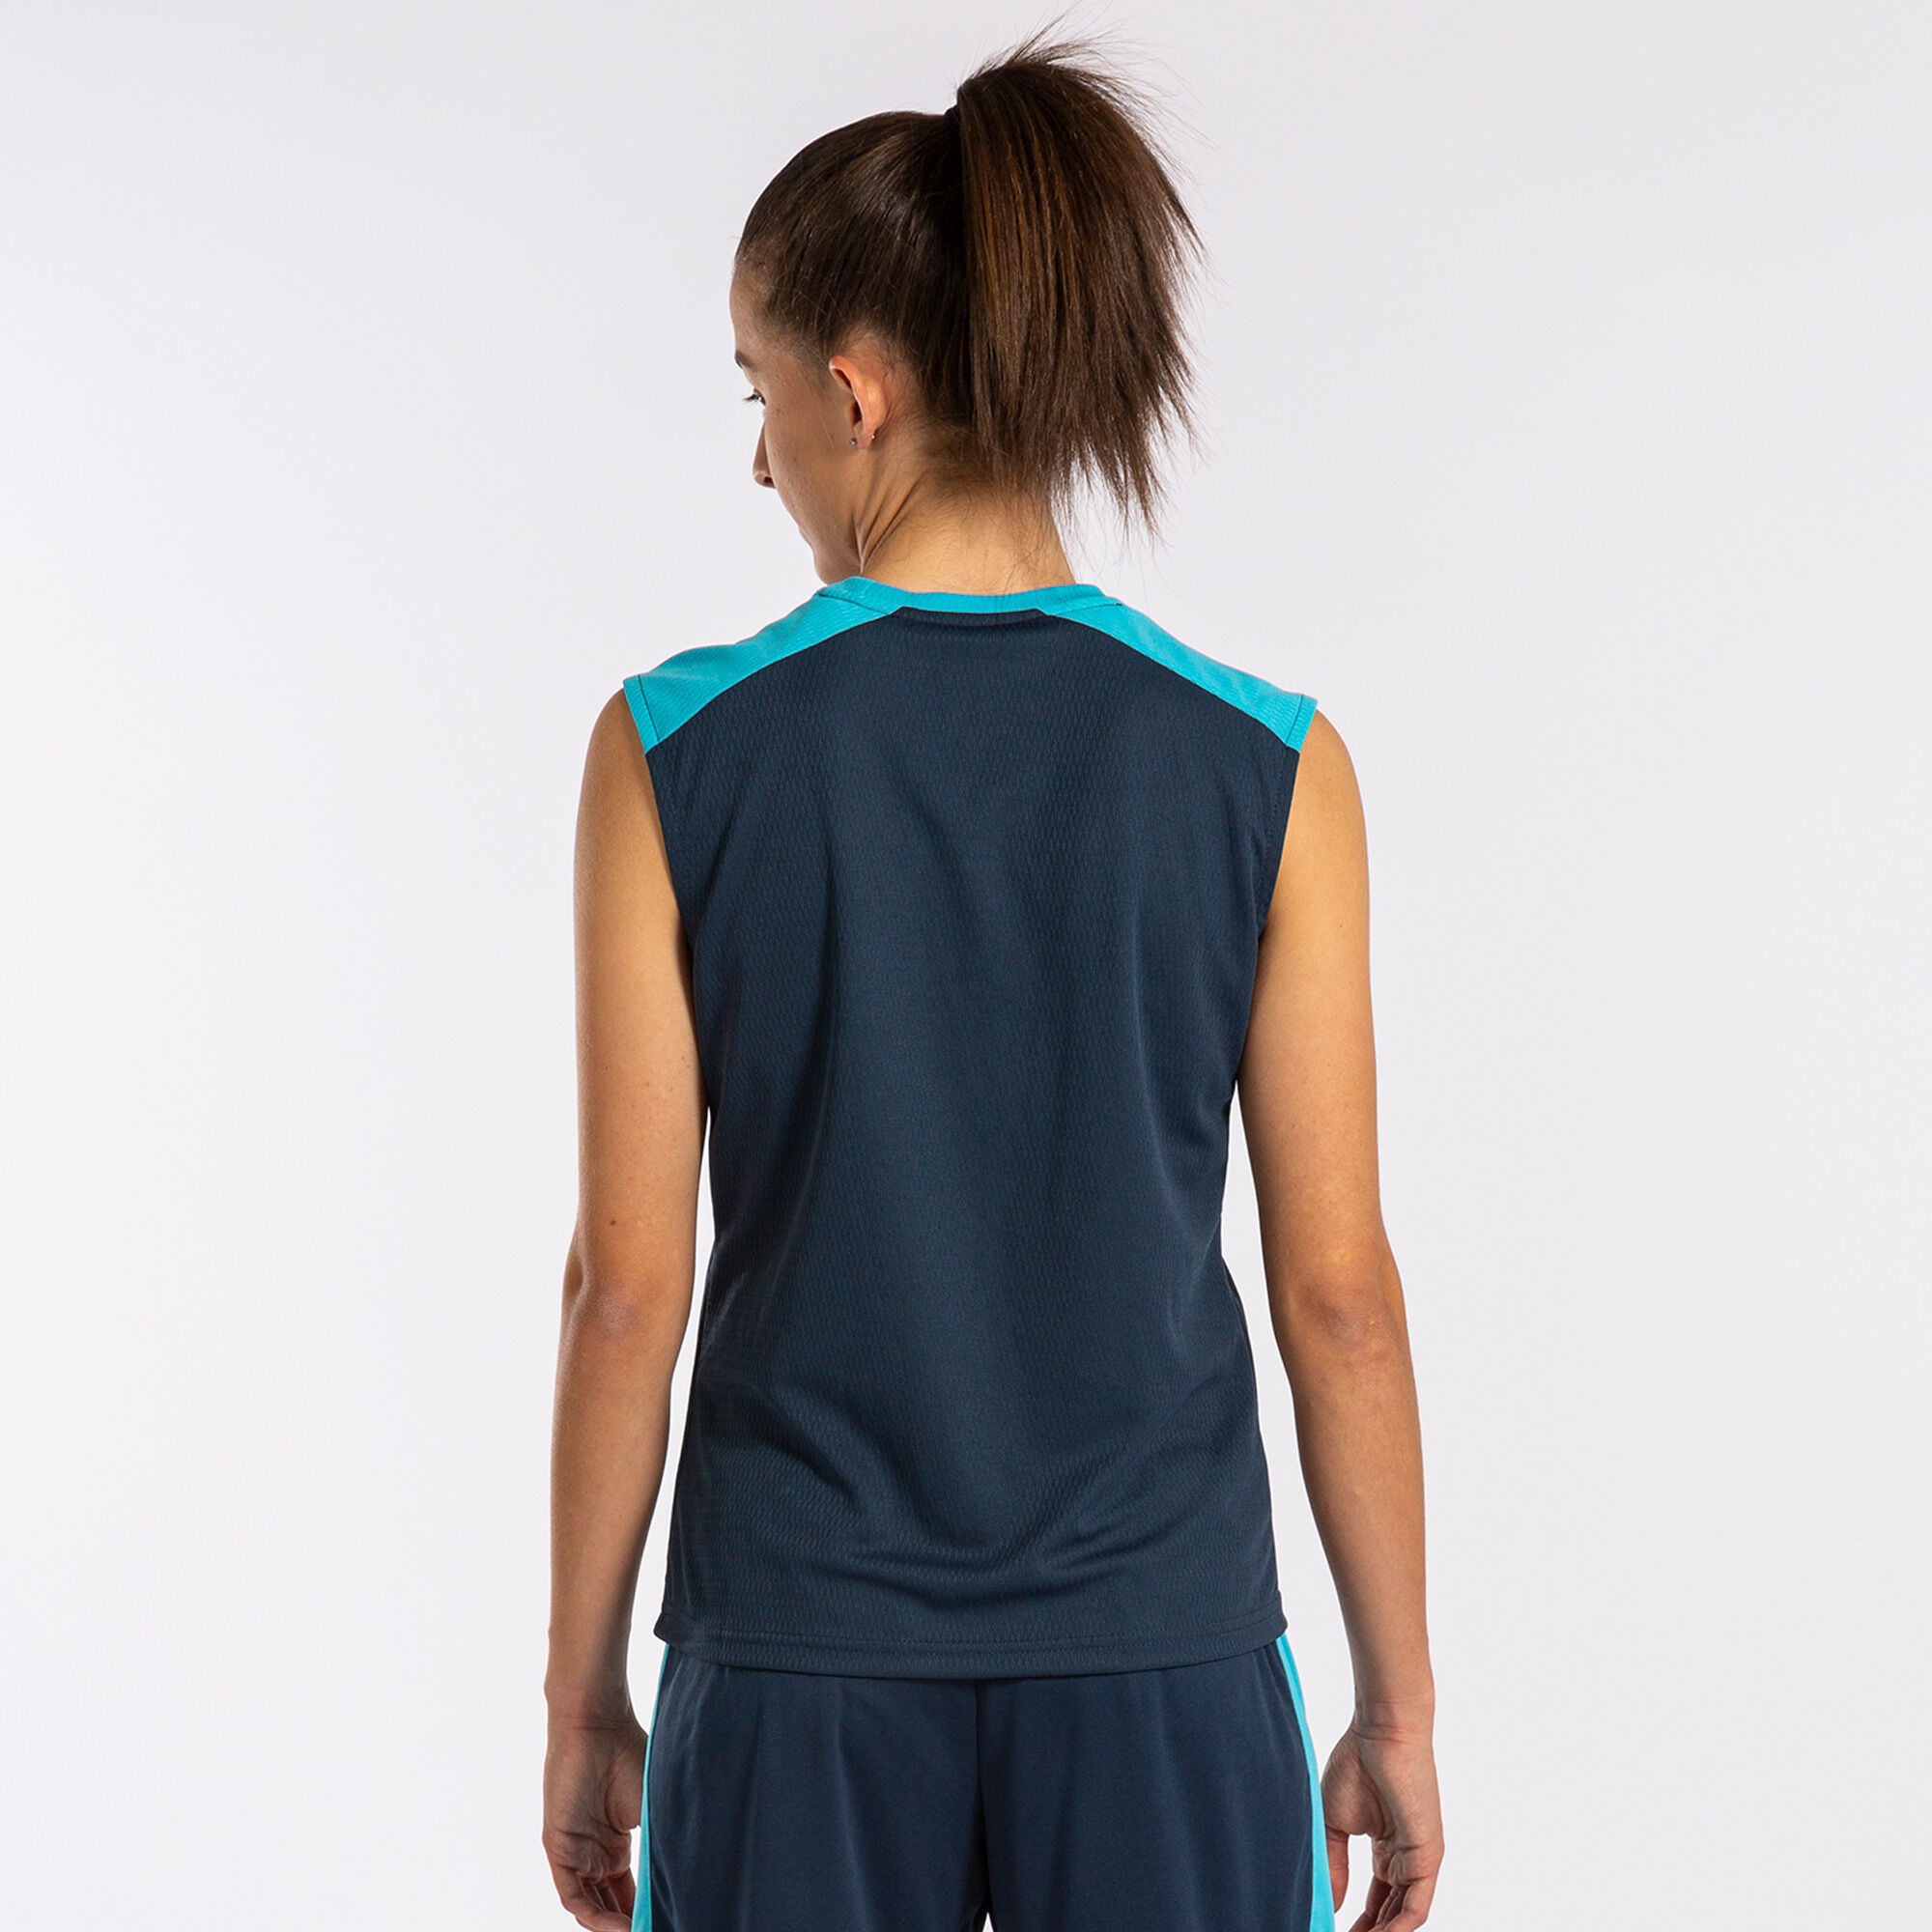 Schulterriemen-shirt frau Eco Championship marineblau neon-türkis